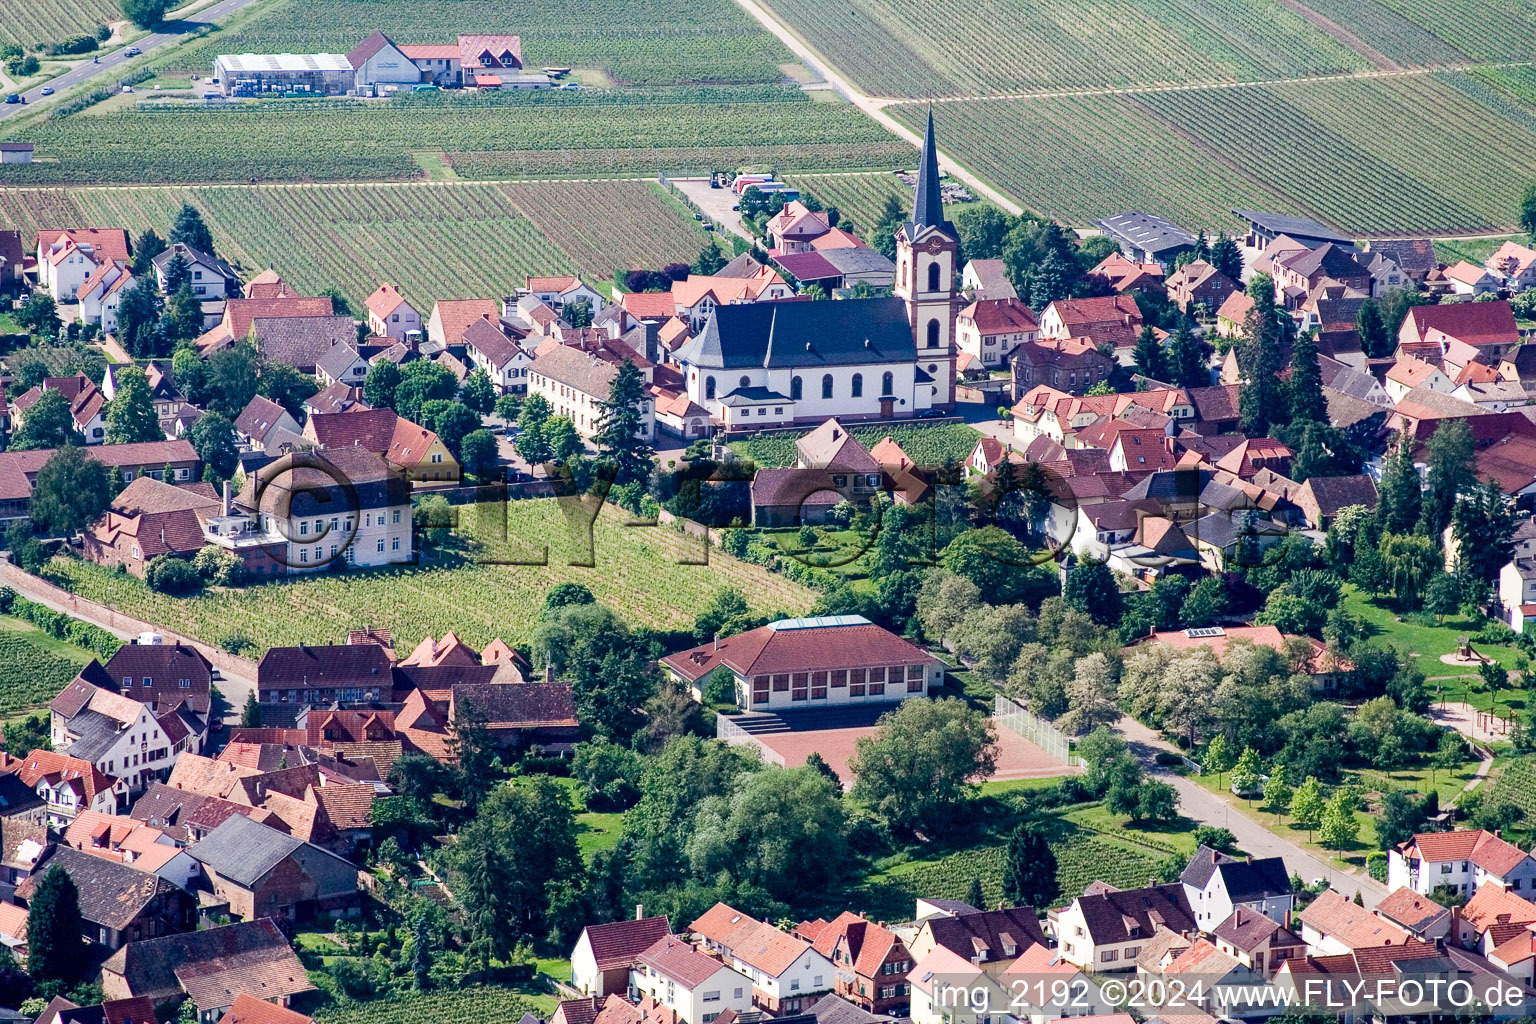 Church building in the village of in Edenkoben in the state Rhineland-Palatinate